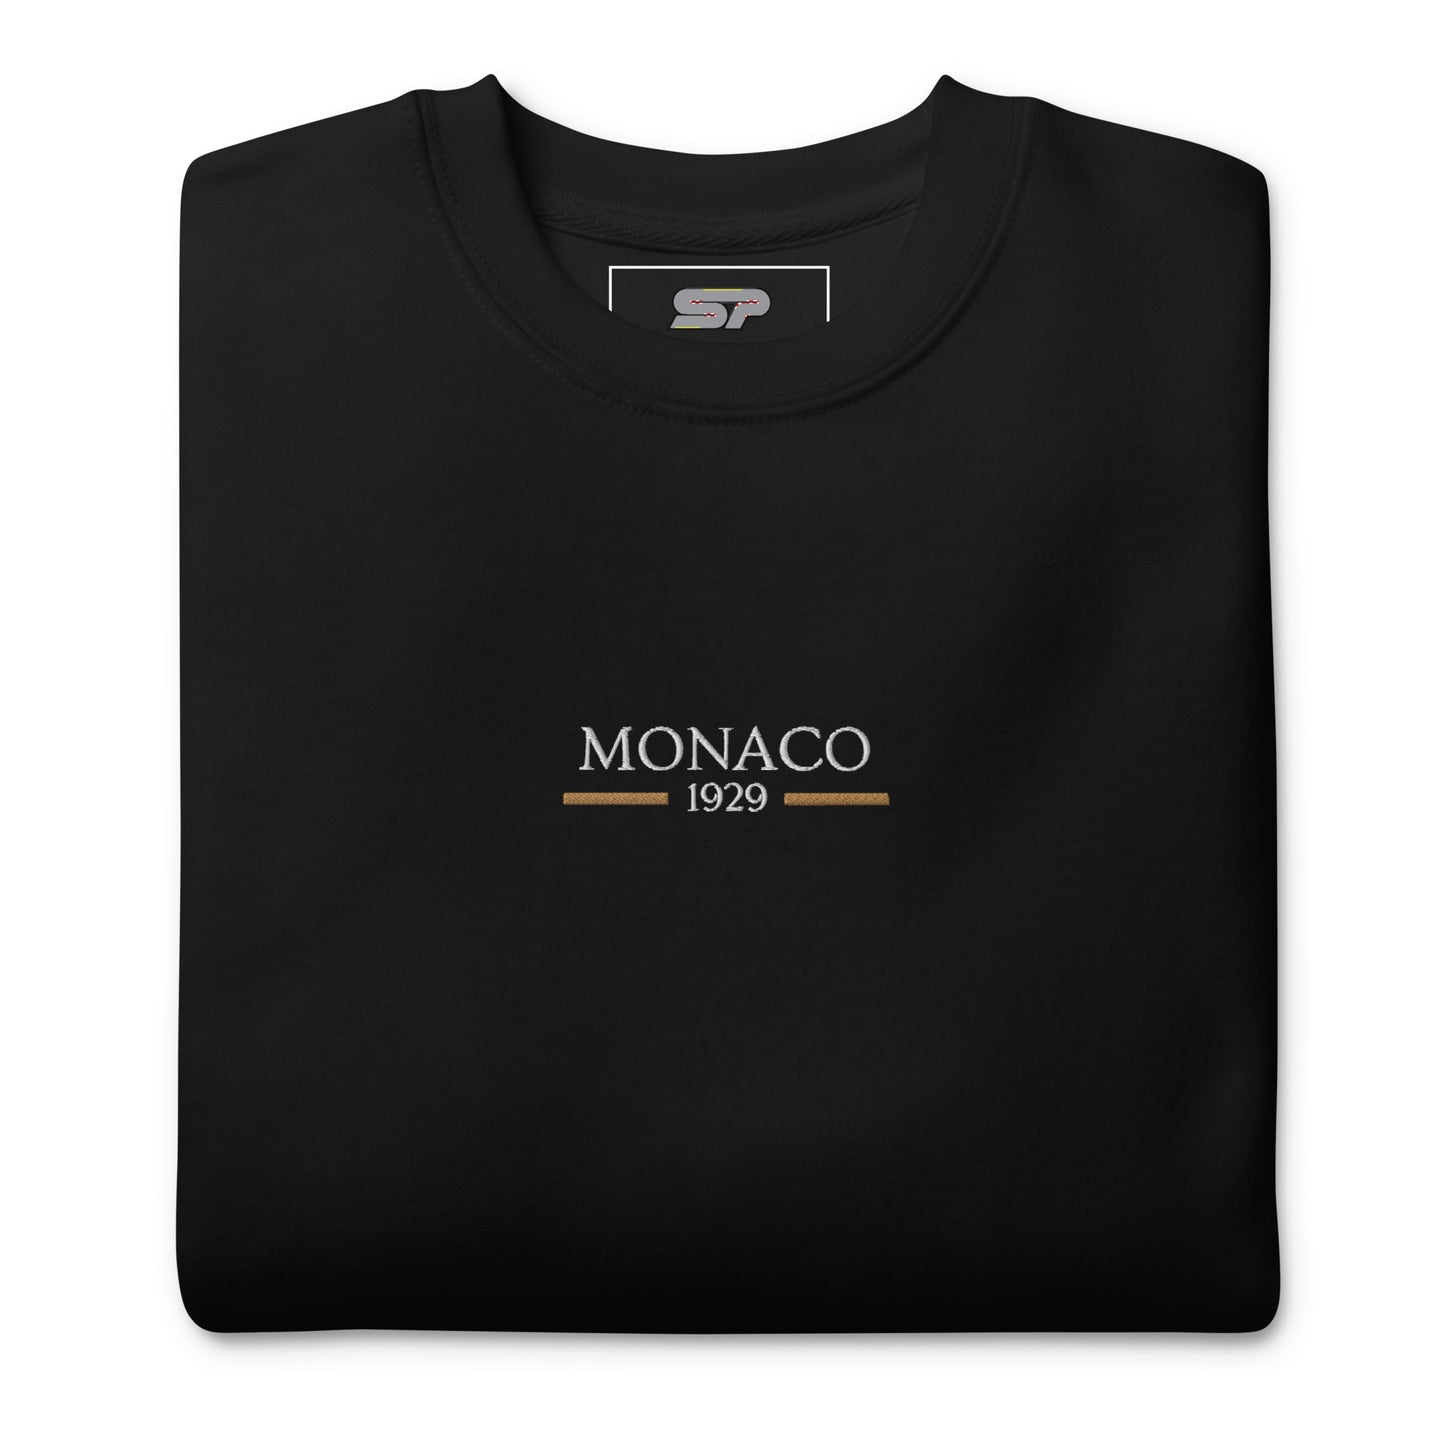 Monaco 1929 Crewneck - Black